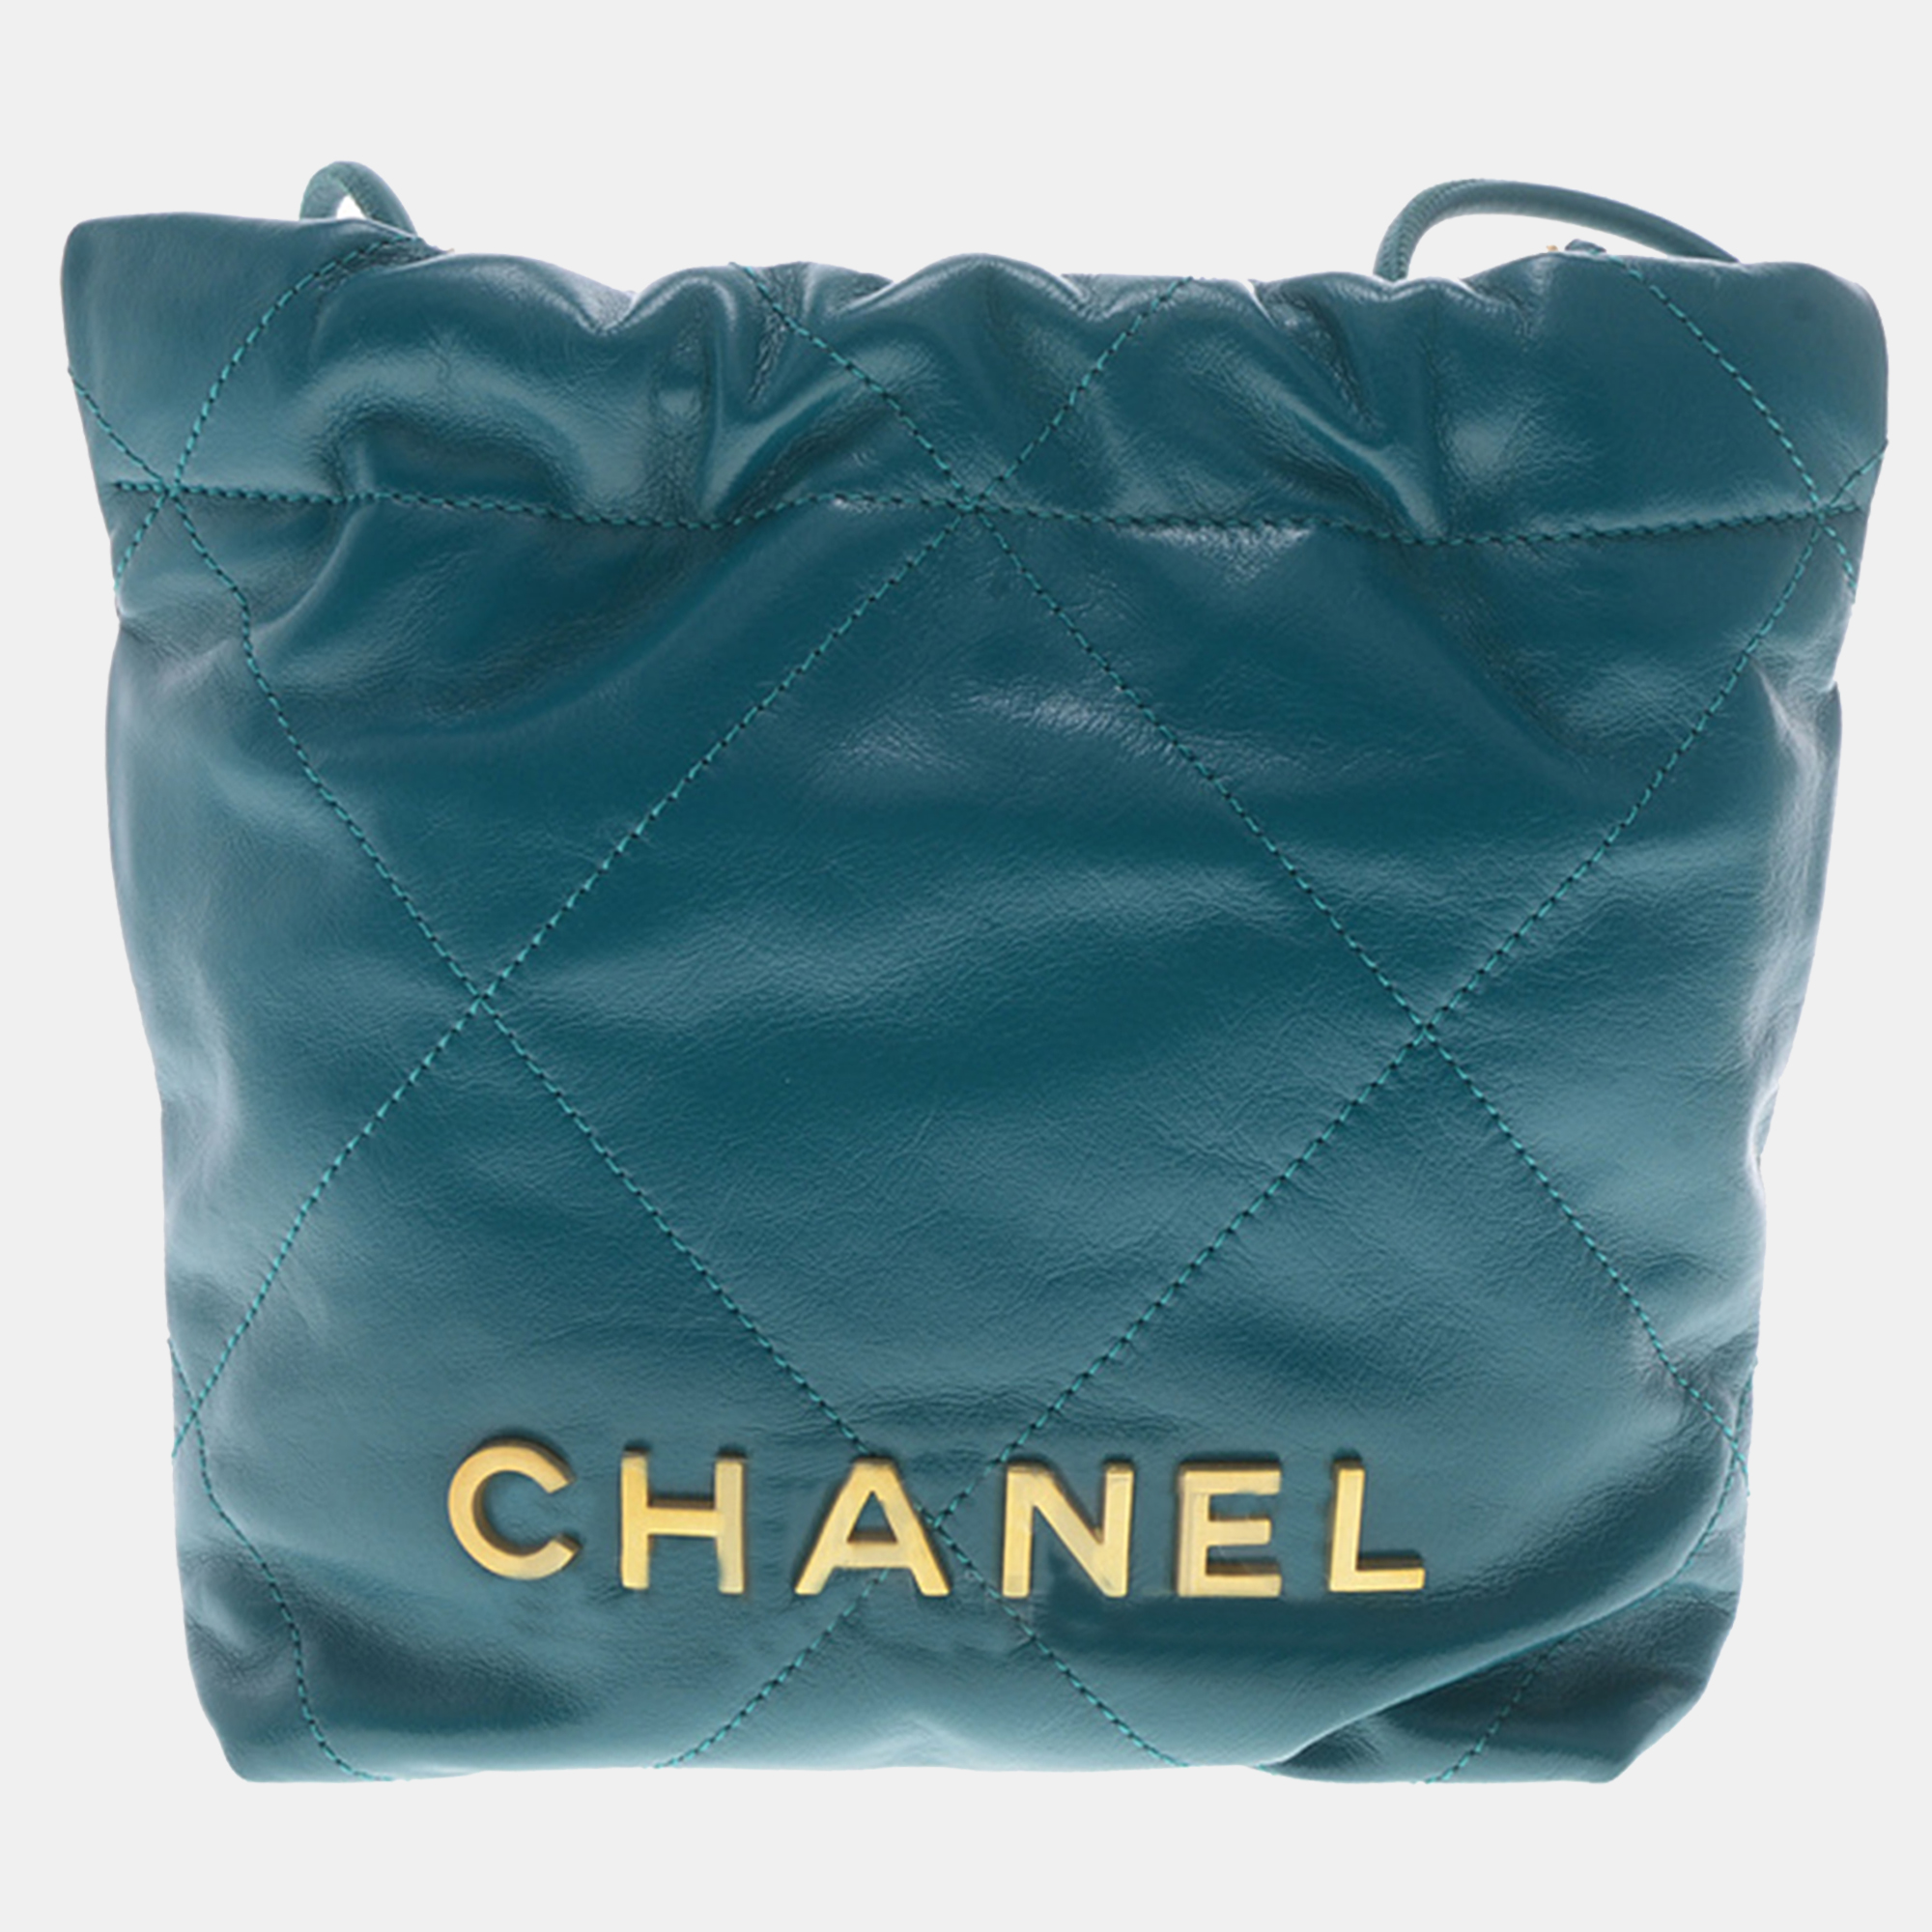 Chanel green leather mini 22 hobo bag